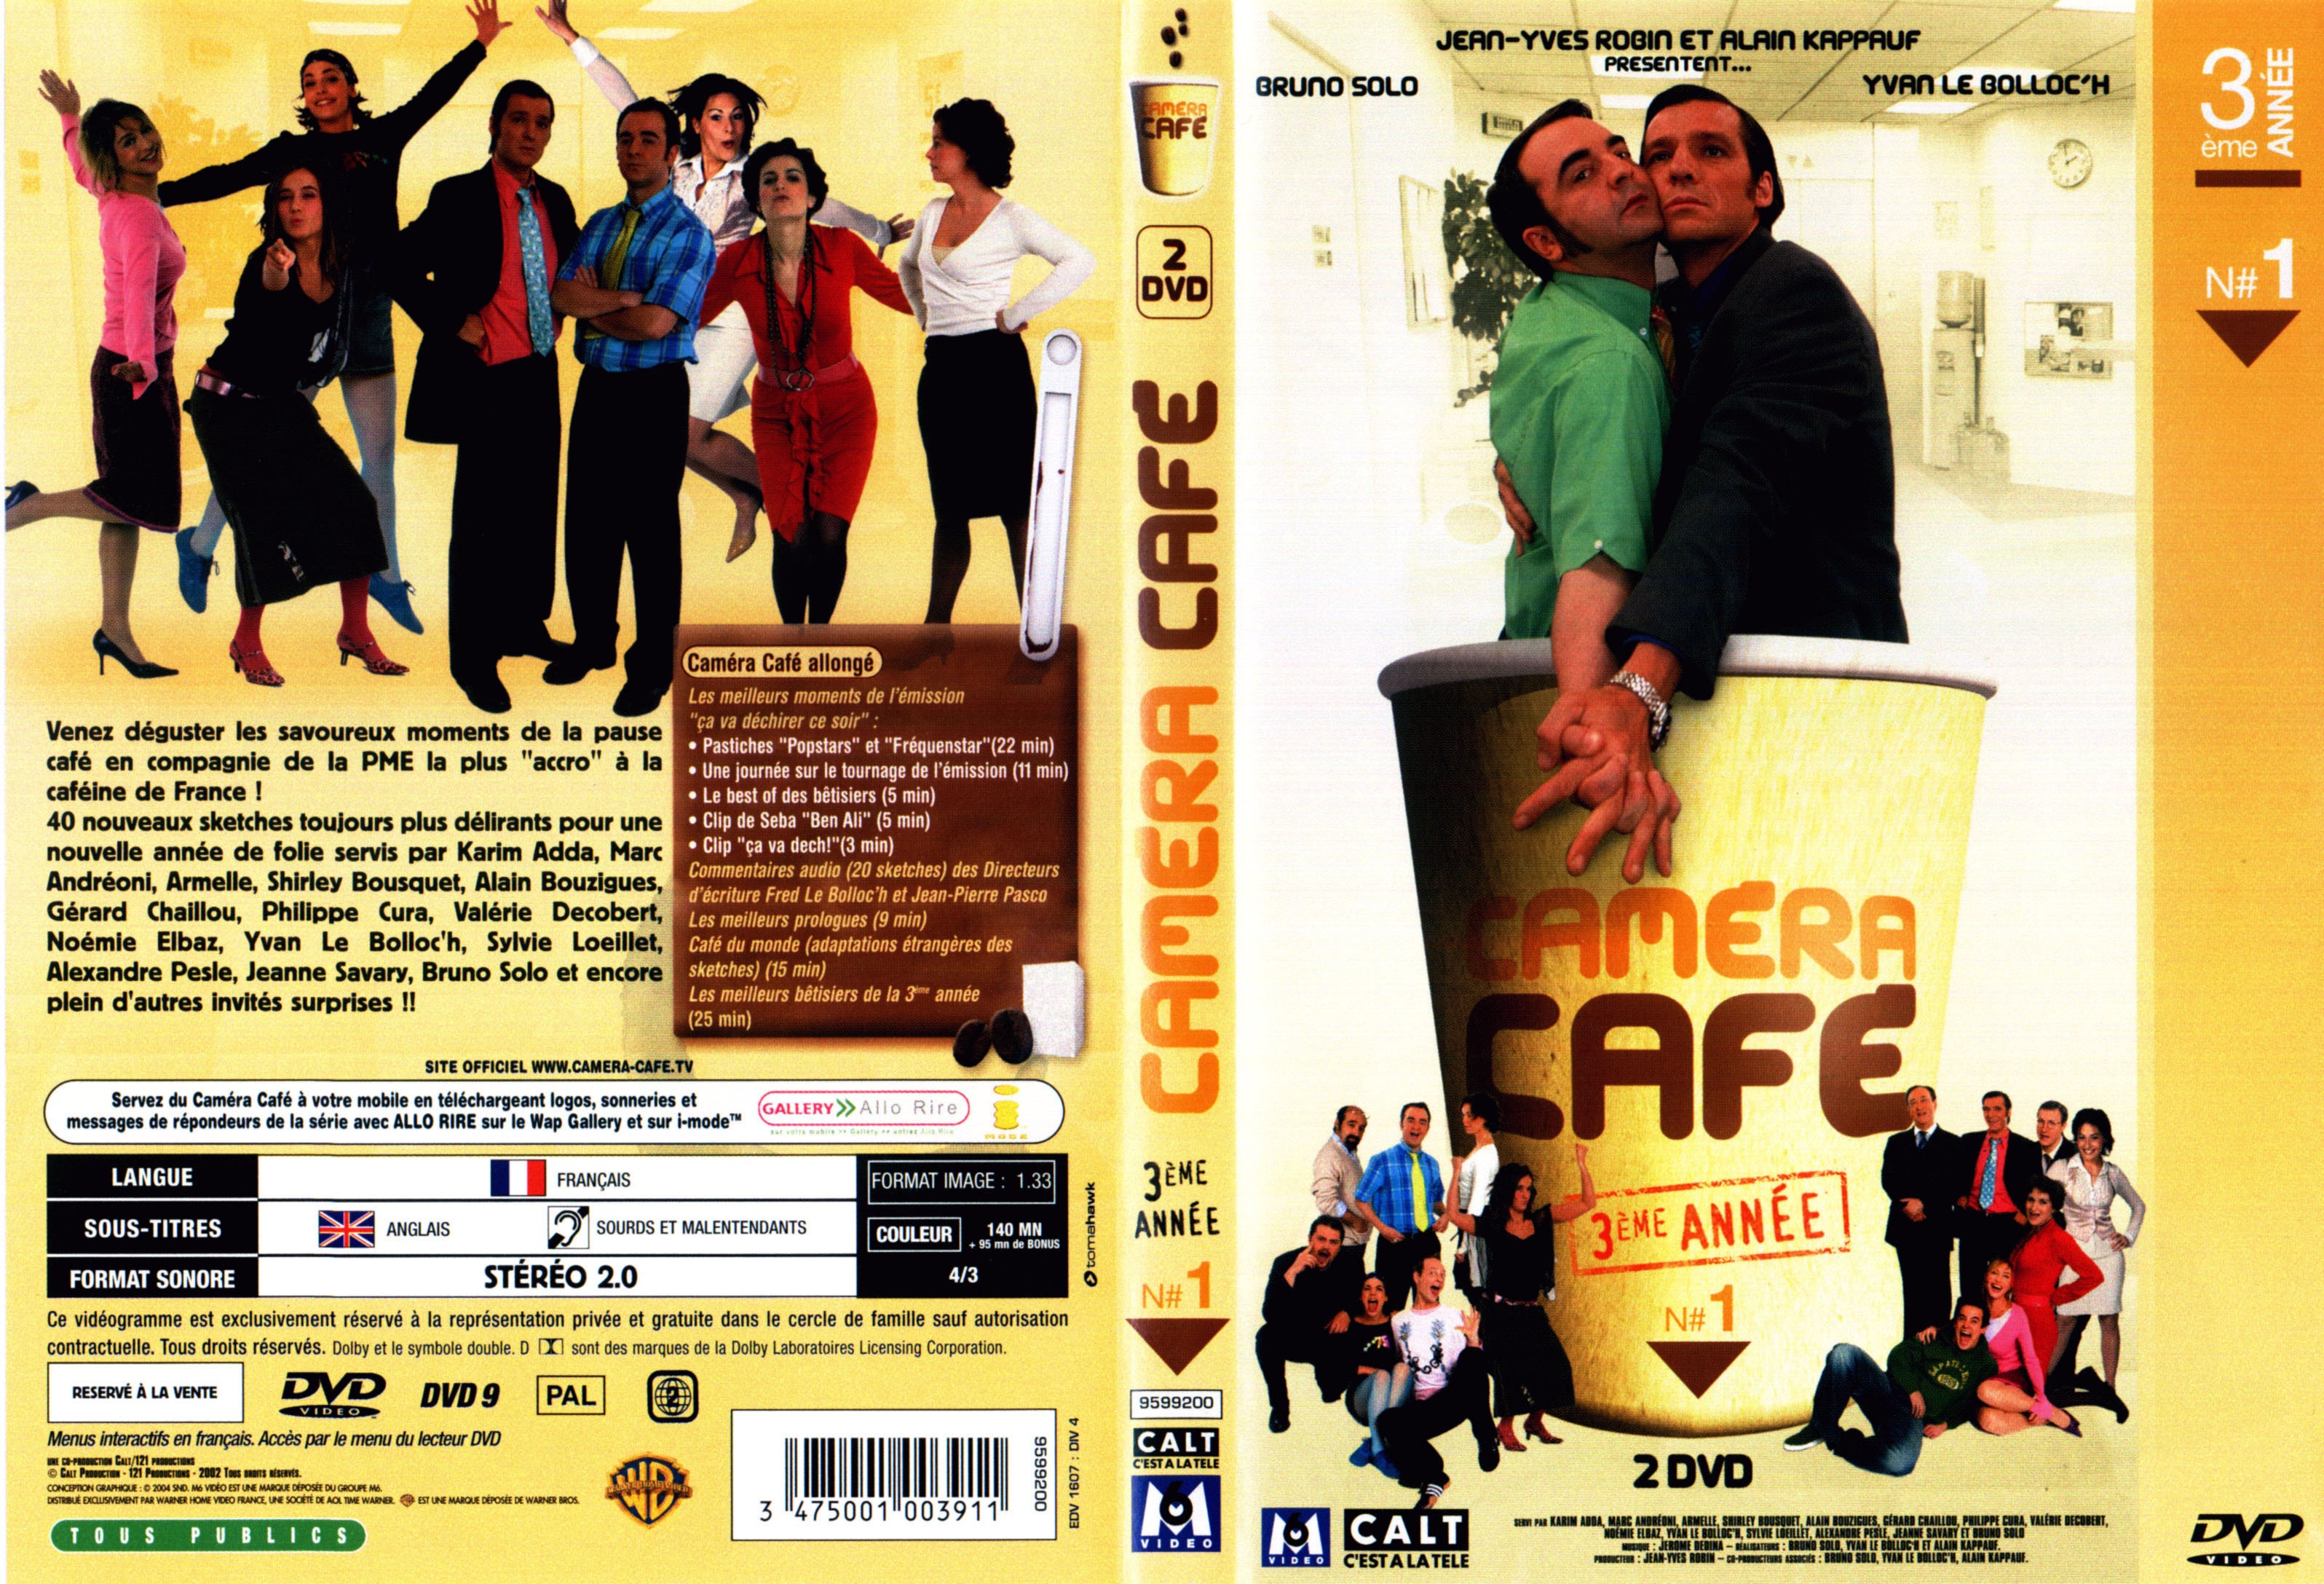 Jaquette DVD Camera cafe saison 3 vol 1